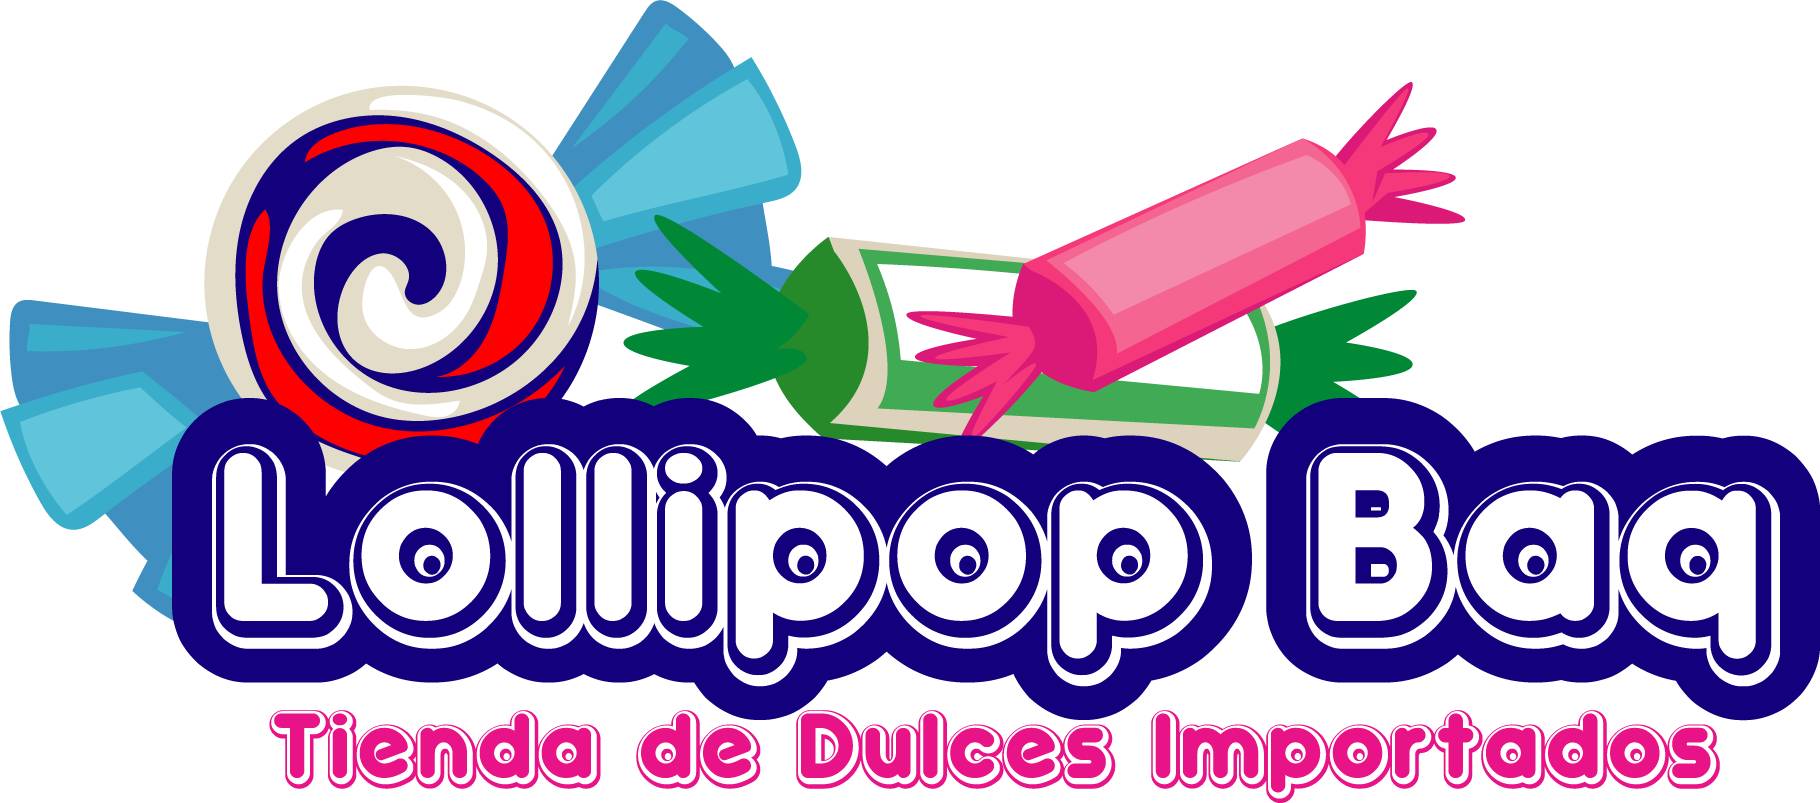 Lollipop Baq